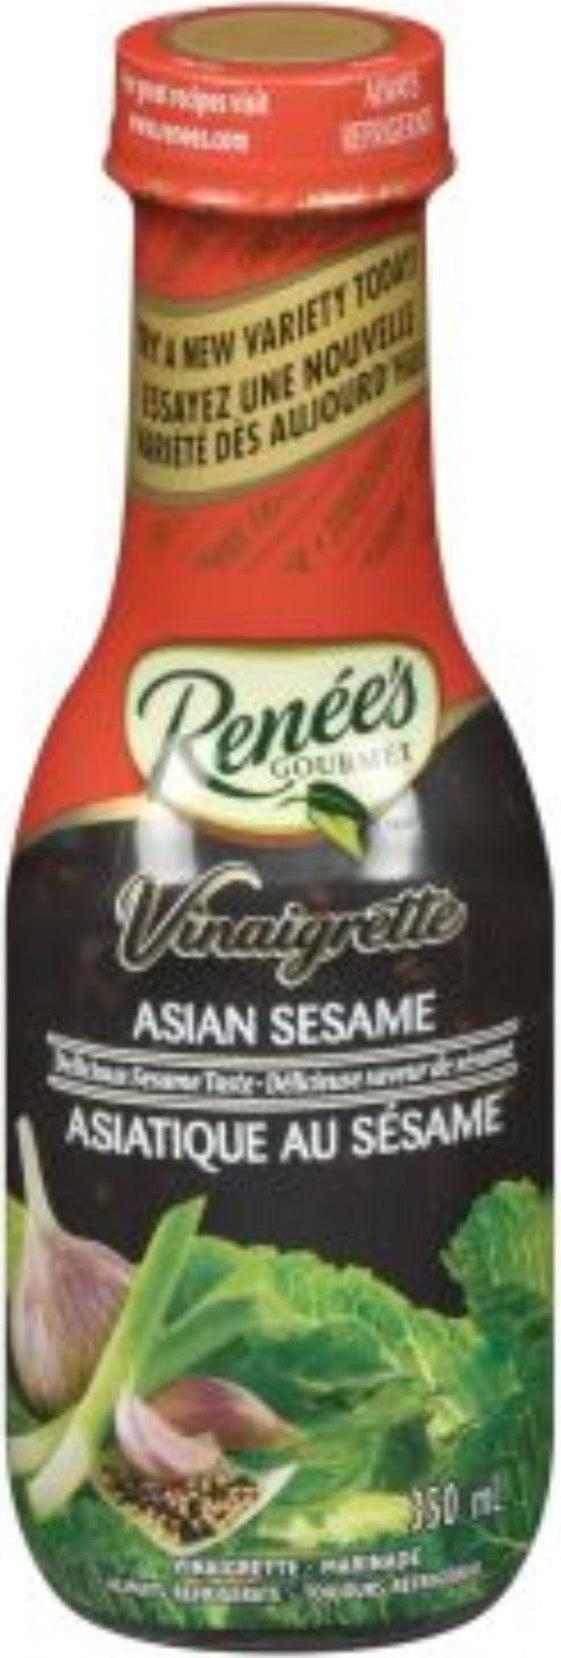 Asian Sesame Vinaigrette 4L